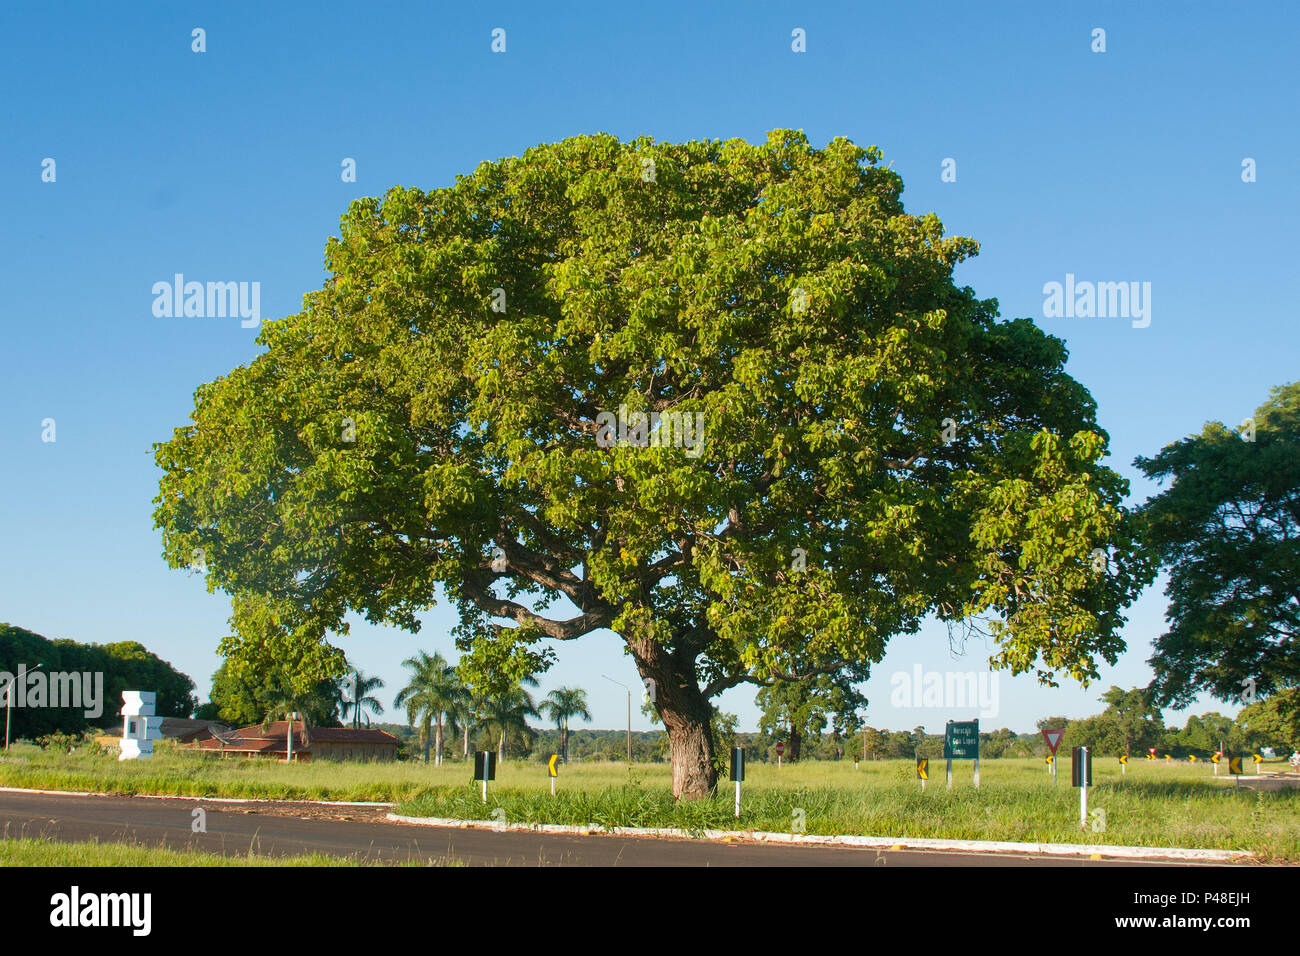 GUIA LOPES DA LAGUNA, MS - 18.03.2015: ARVORE DE PEQUI - Árvore de pequi (Caryocar brasiliense) às margens de uma Rodovia. (Foto: Daniel De Granville/Fotoarena) Stockfoto